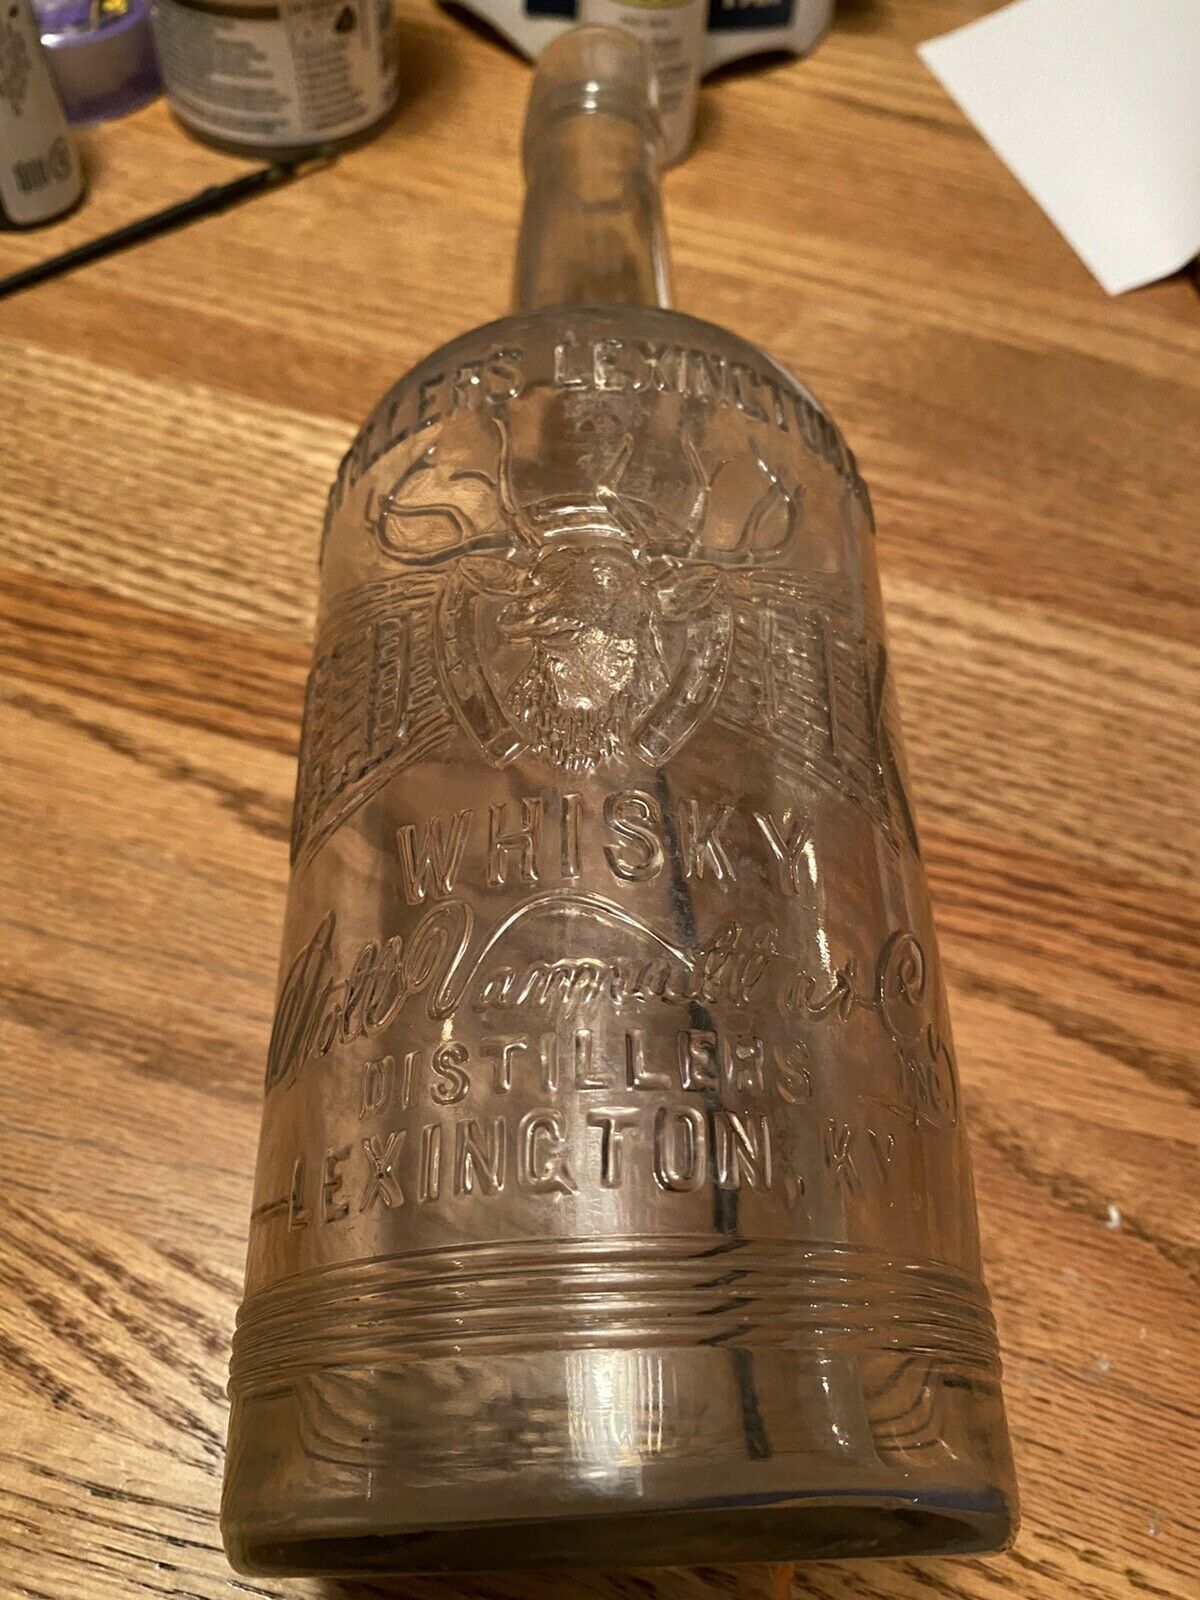 Old Elk Whiskey Bottle Stroll , Vannatta & Co. Lexington Ky.